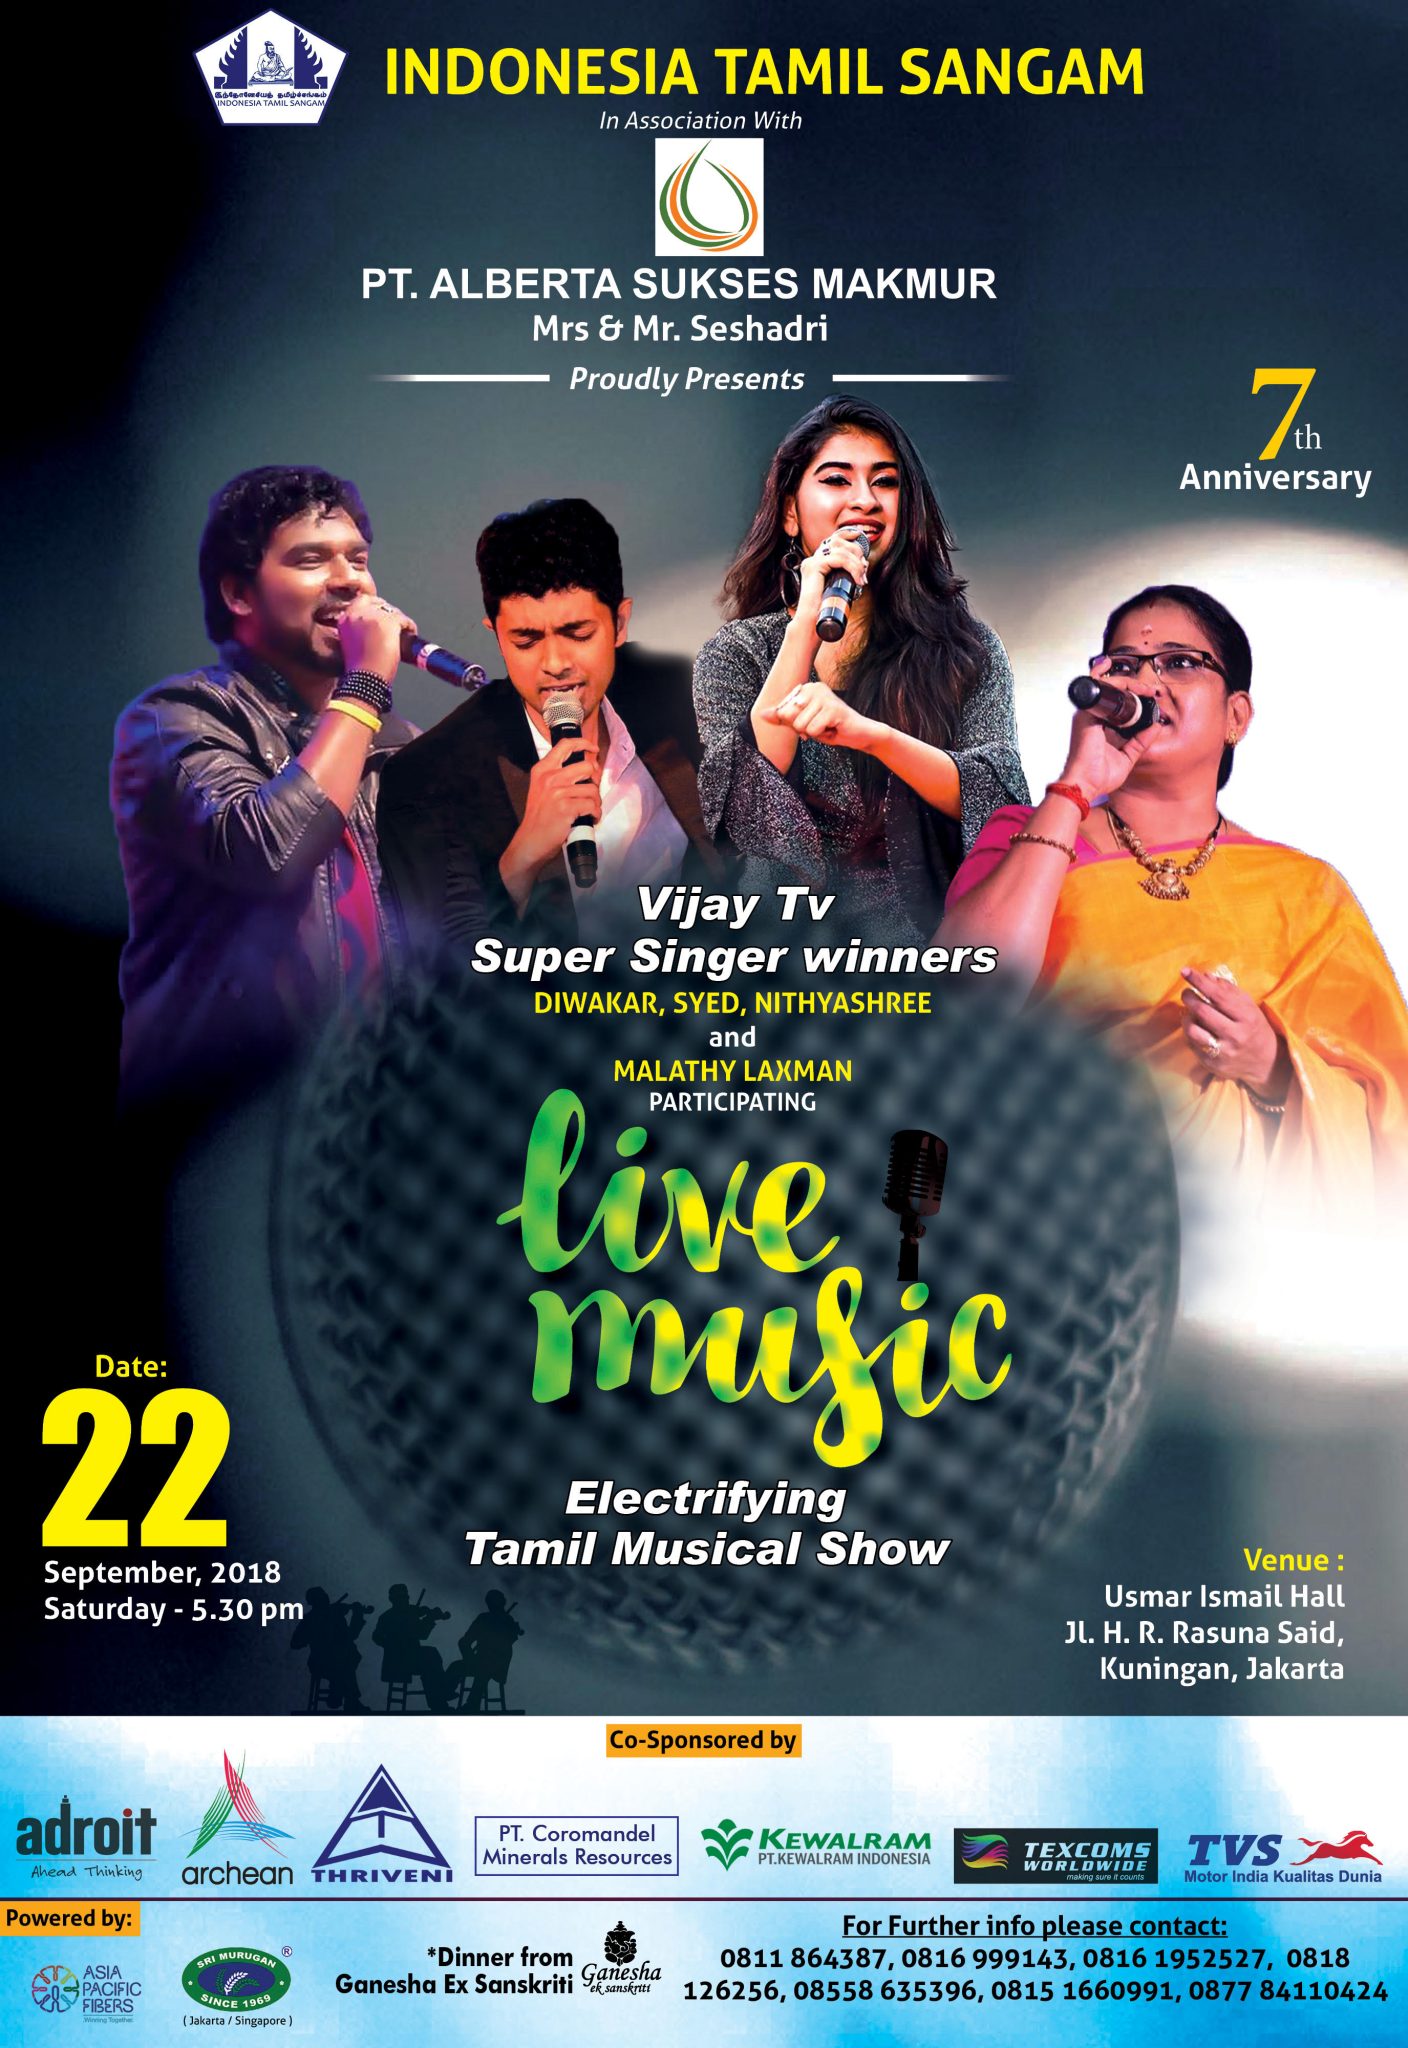 Grand Gala Musical Program Of Indonesia Tamil Sangam, By Vijay Tv Super Singer Winners - On Saturday, 22nd September, 2018